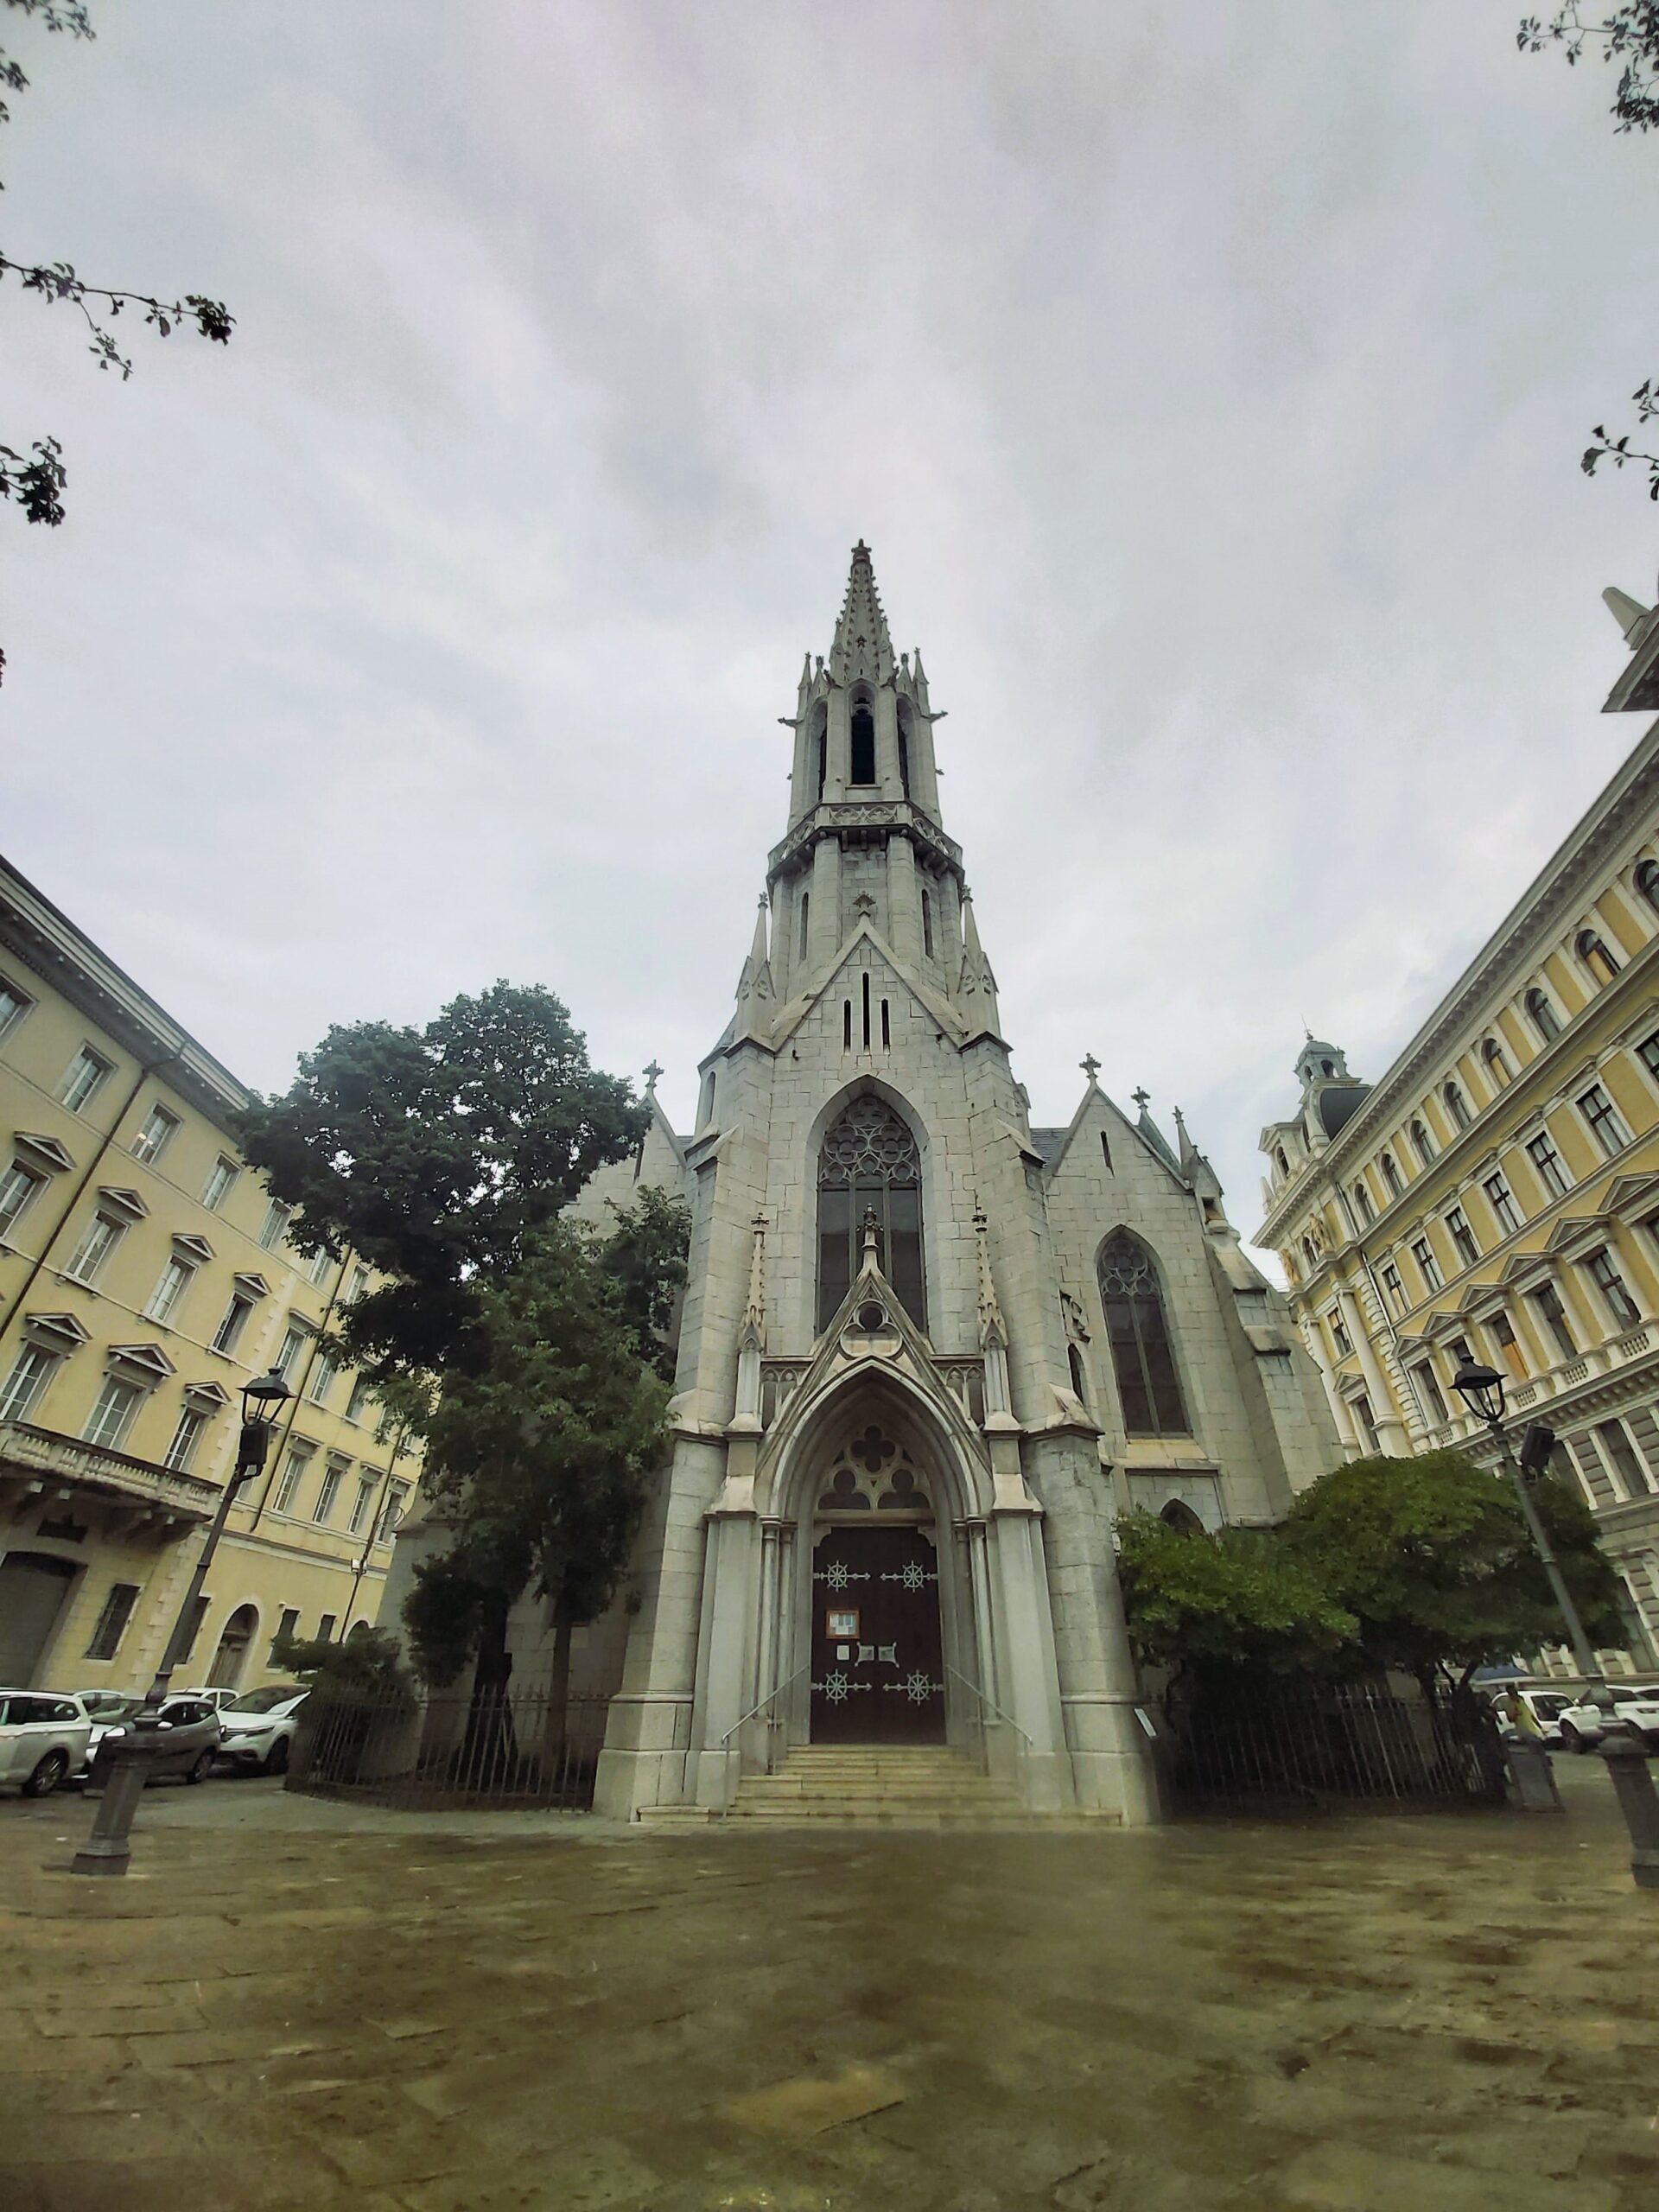 A grey church between brighter buildings in Trieste, Italy